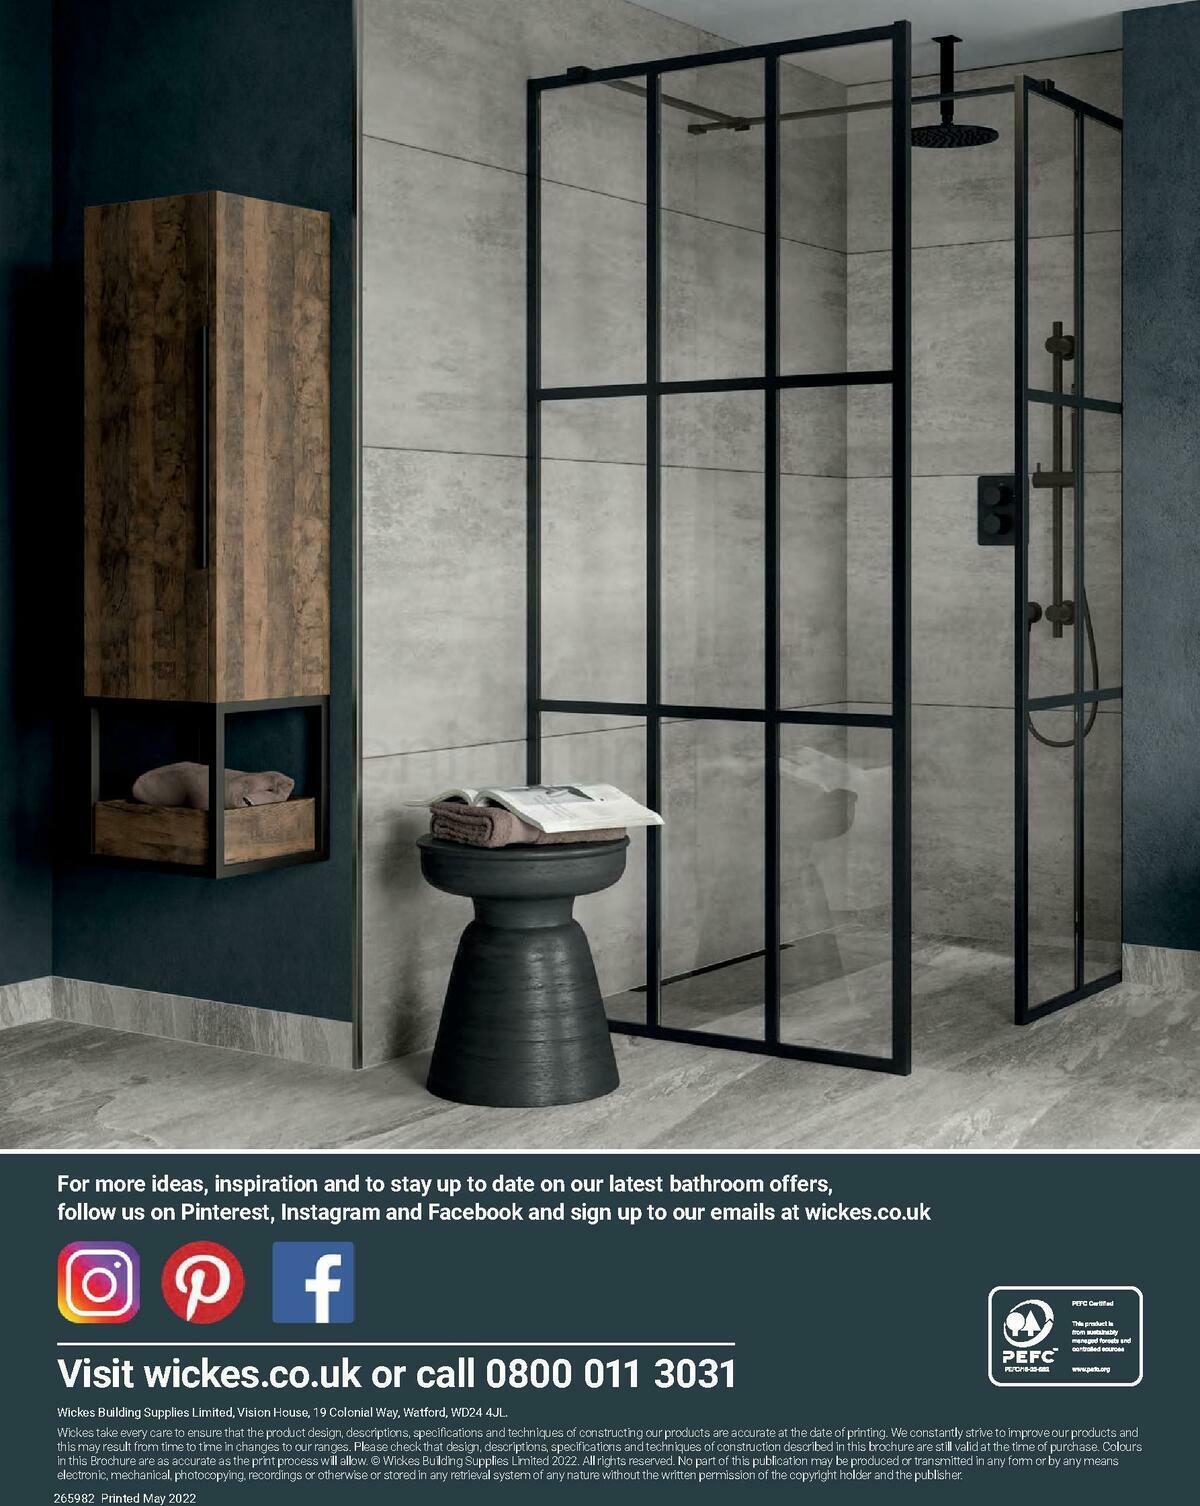 Wickes Showroom bathrooms brochure Offers from 1 June